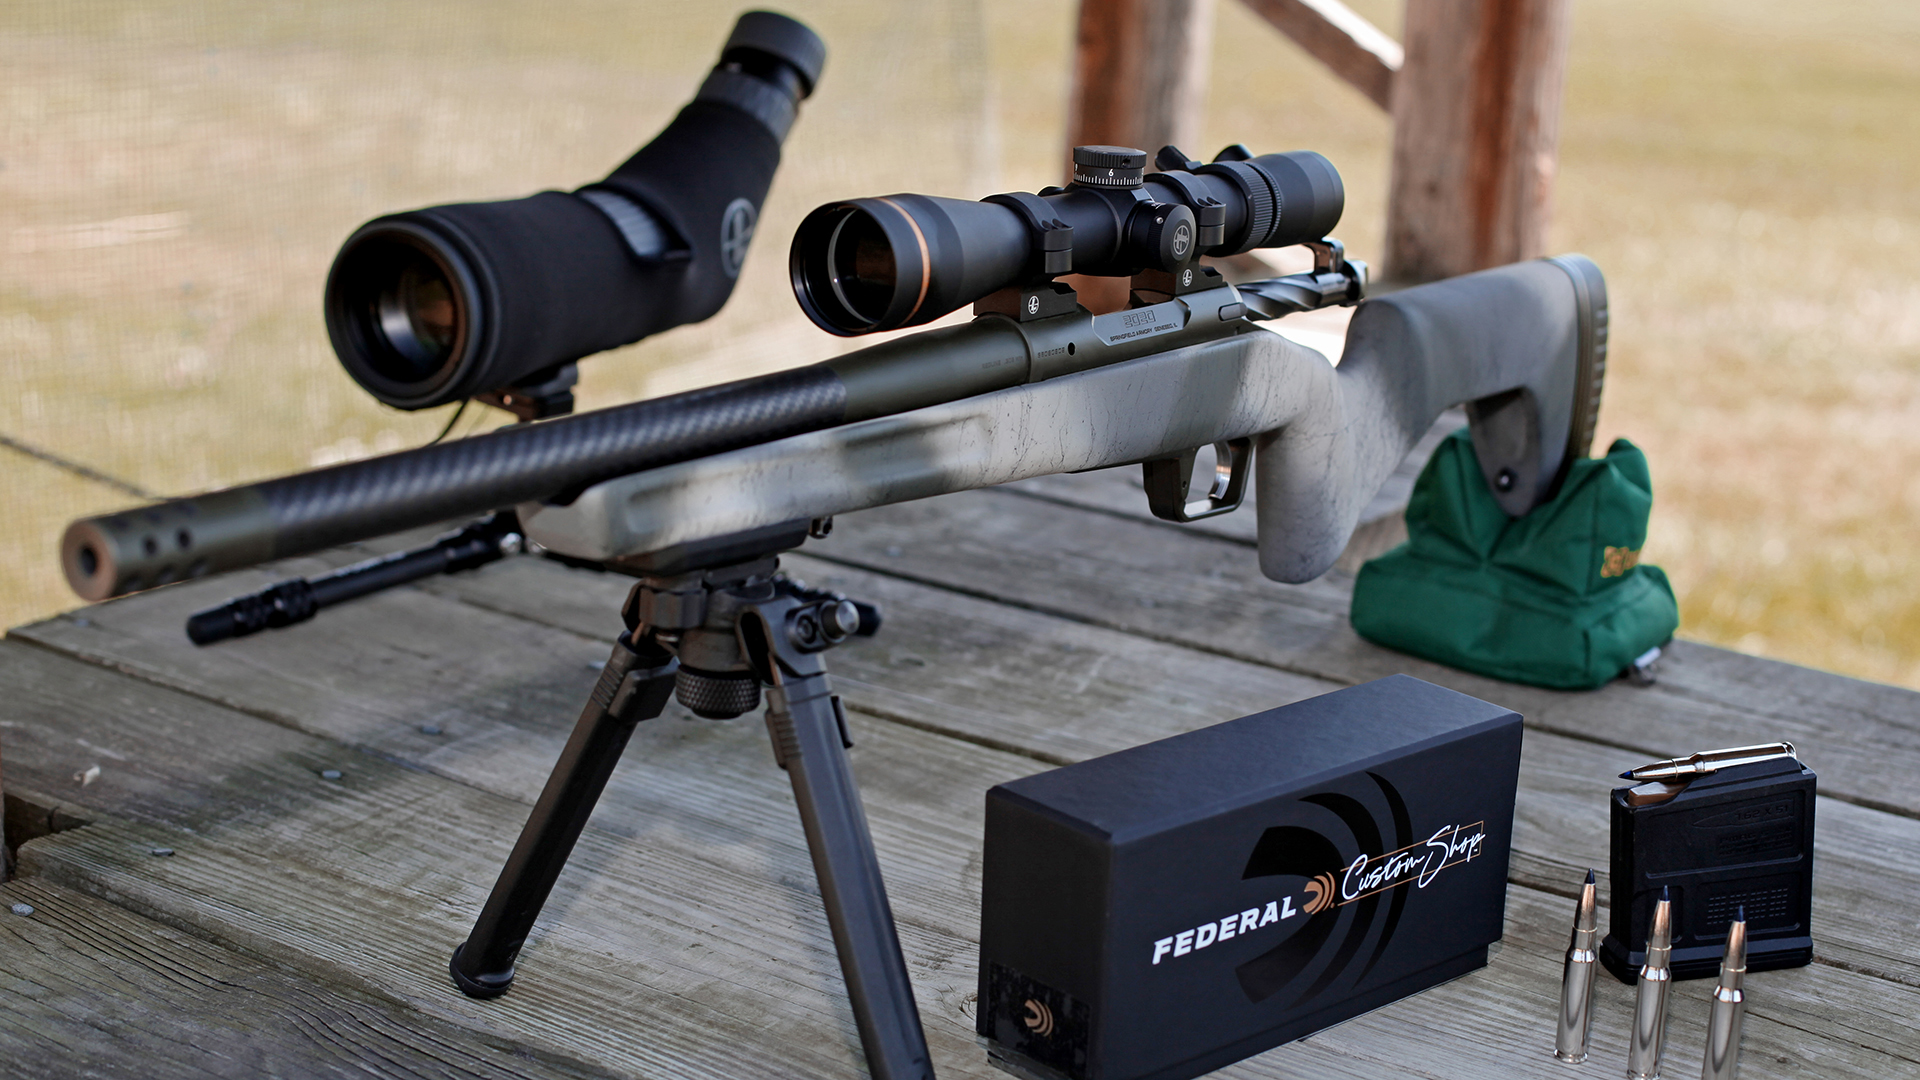 Springfield Armory Redline bolt-action rifle camouflage grayboe stock leupold riflescope on bench shooting range with ammunition spotting scope rear sandbag